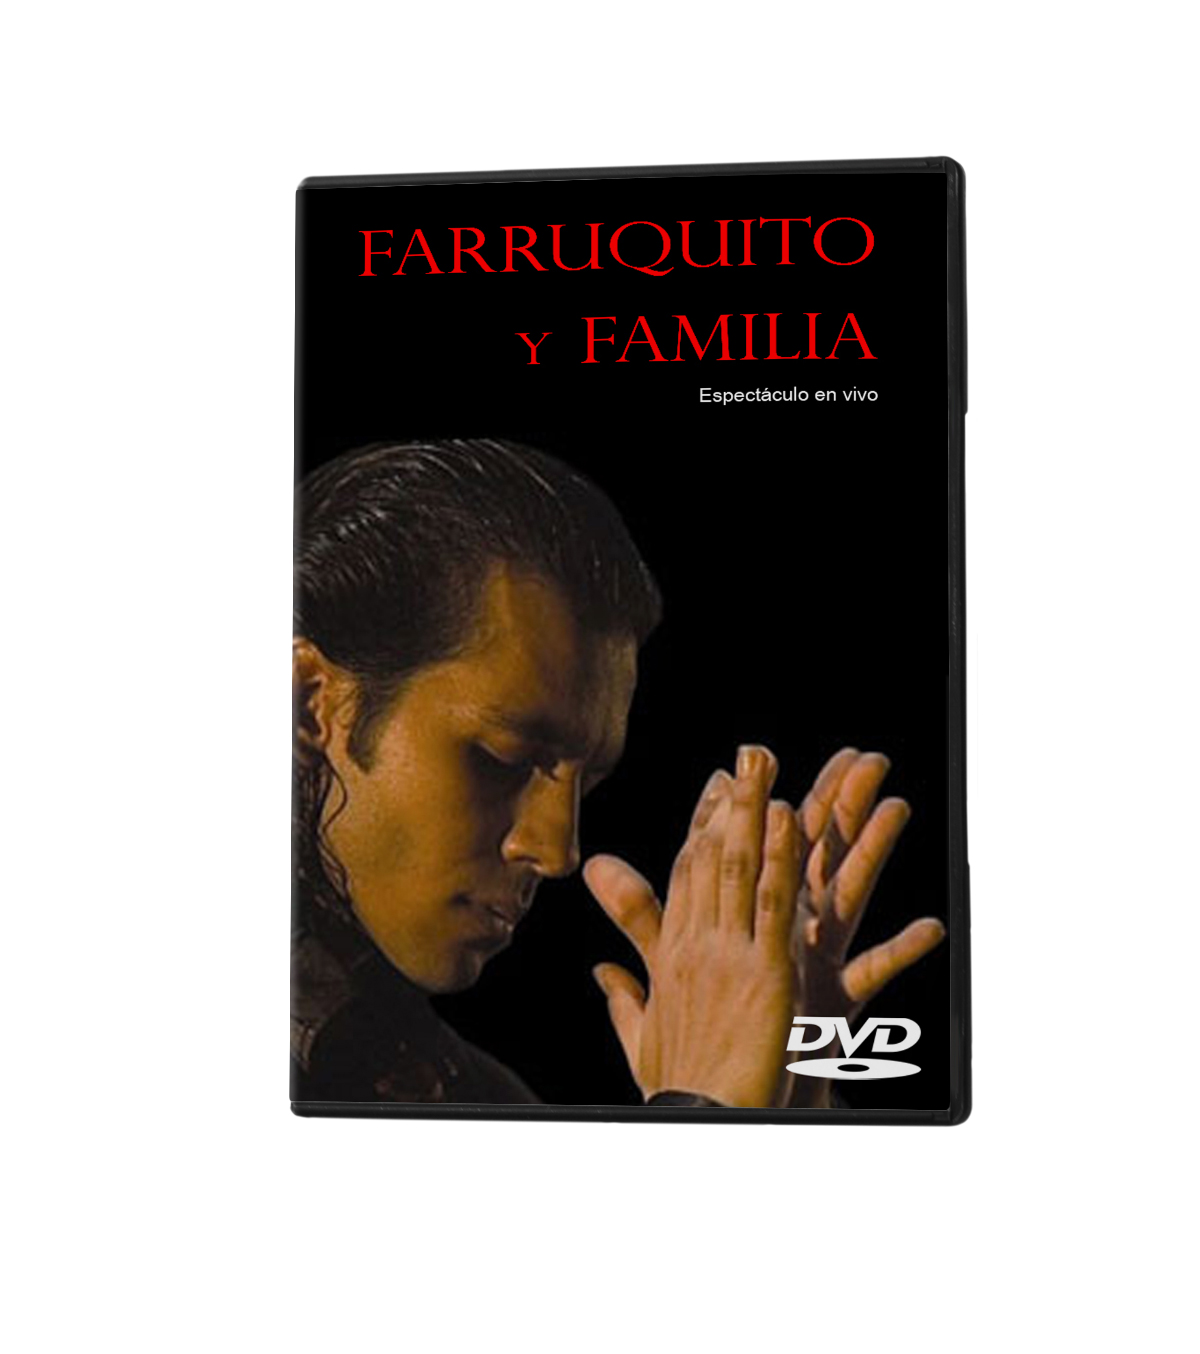 Farruquito and family: Live Show DVD